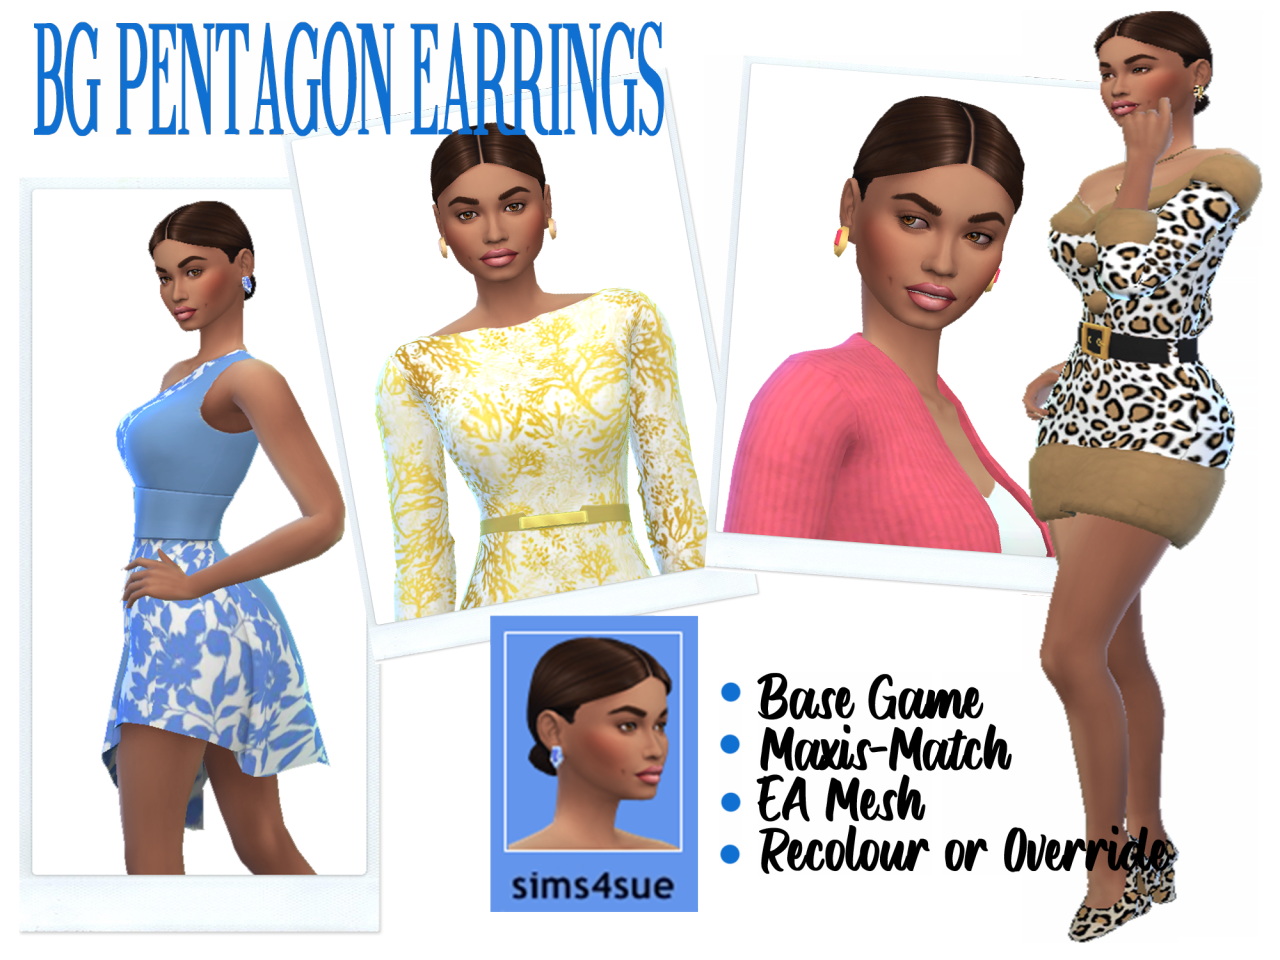 BG PENTAGON EARRINGS at Sims4Sue » Sims 4 Updates